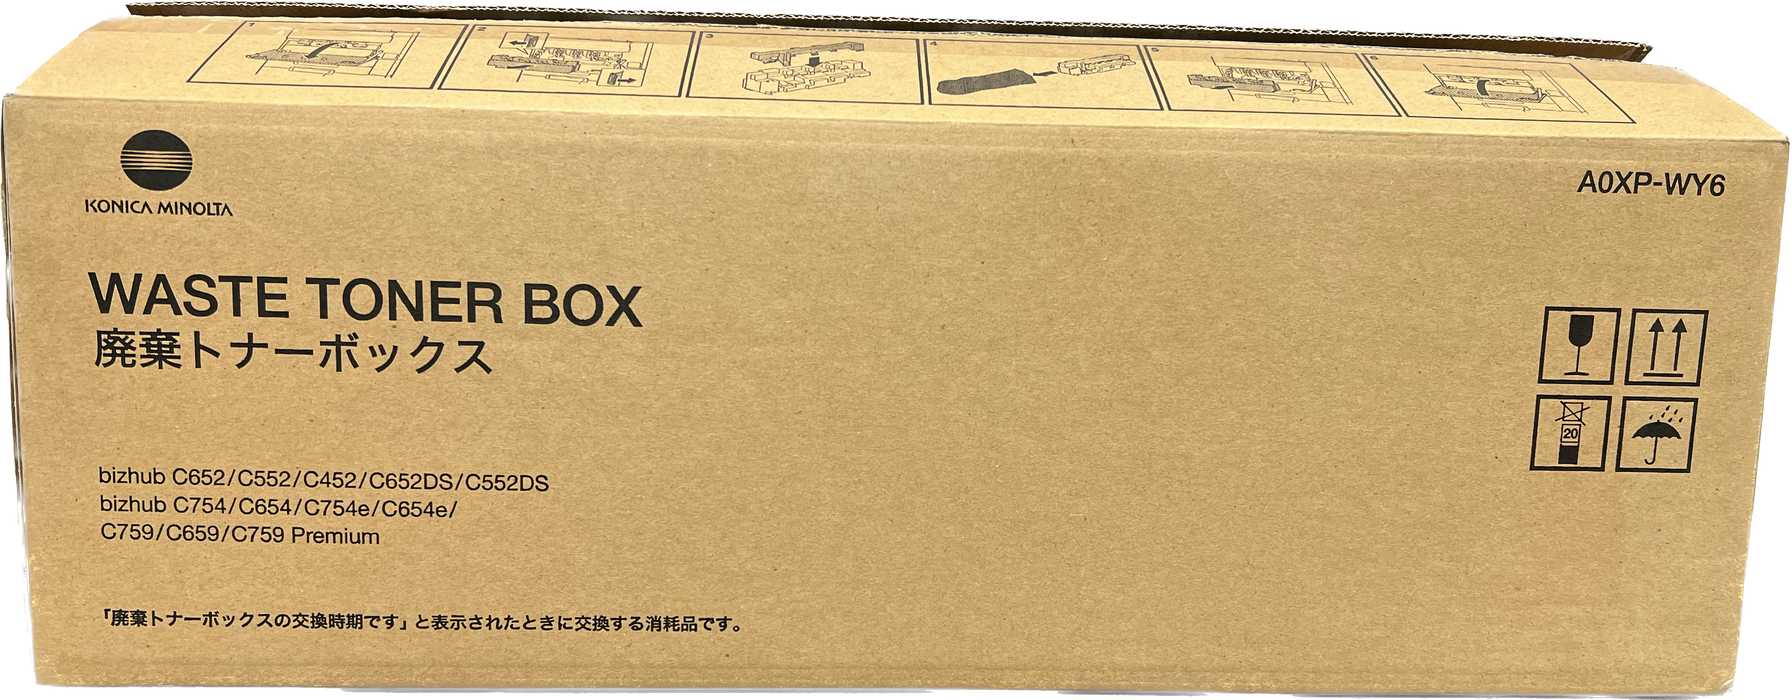 Konica Minolta Waster Toner Box | A0XP-WY6